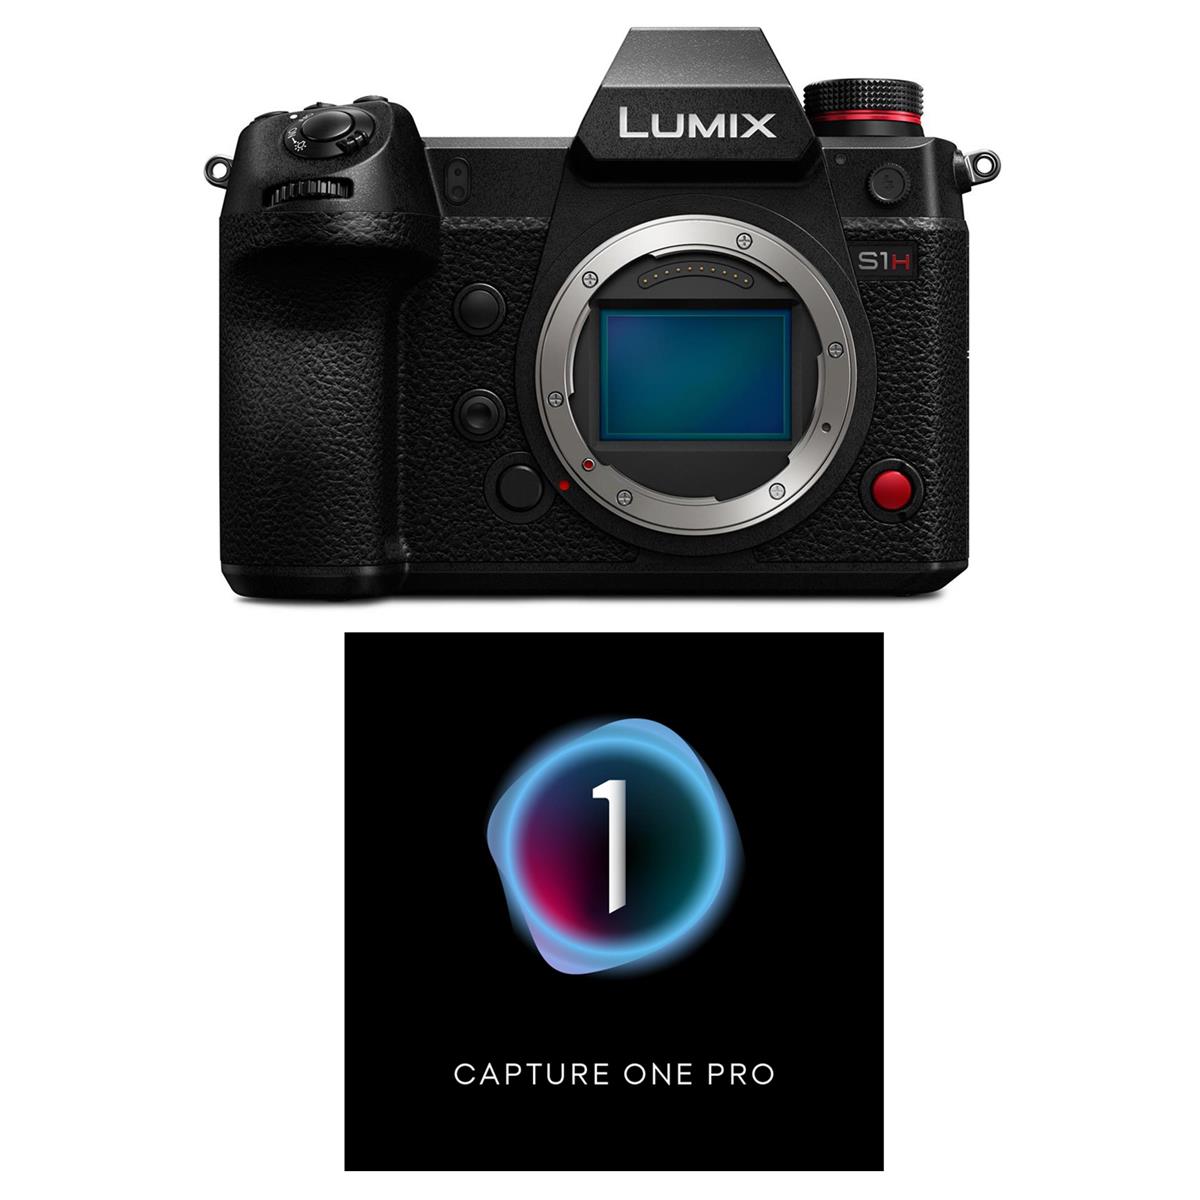 Panasonic Lumix DC-S1H Mirrorless Digital Camera Body with Capture One Pro